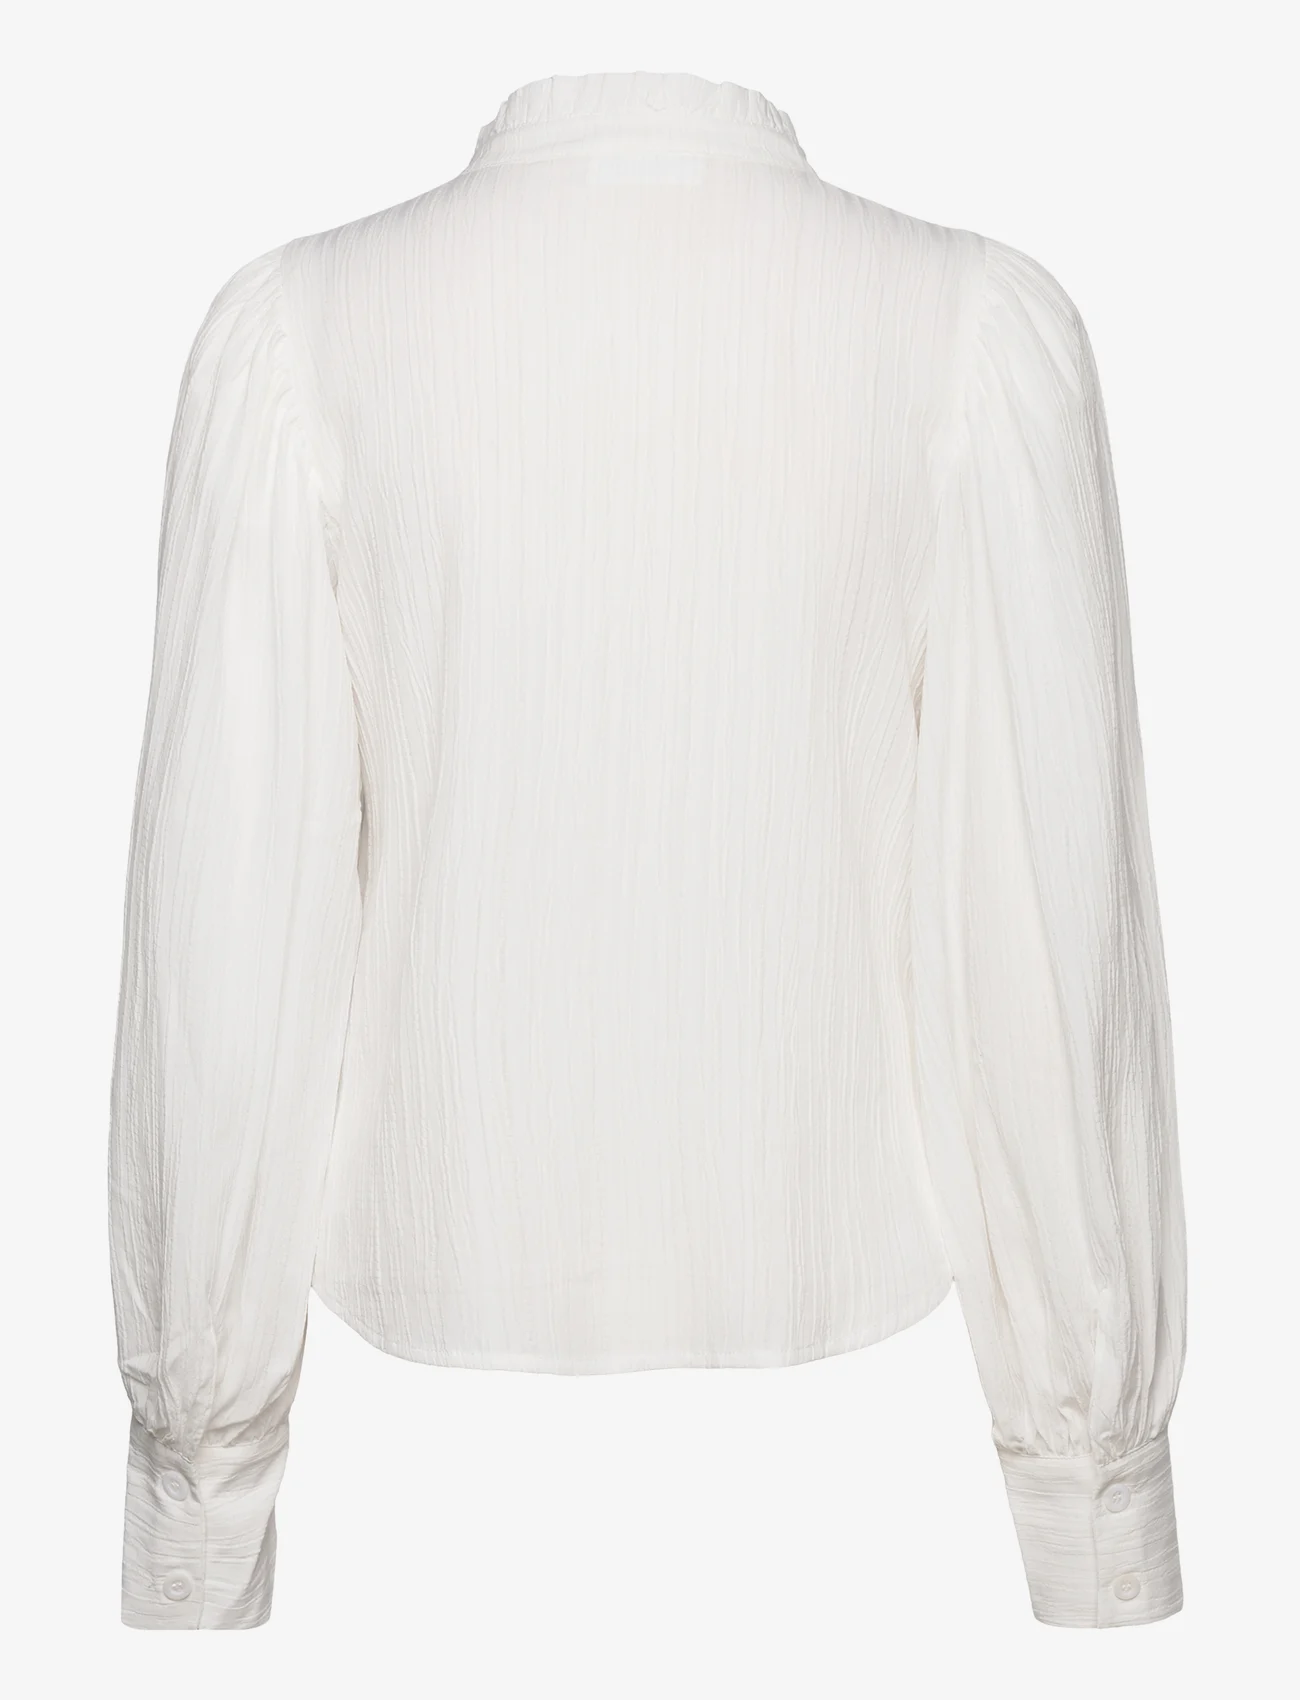 Karen By Simonsen - FrostyKB Frill Shirt - long-sleeved shirts - bright white - 1